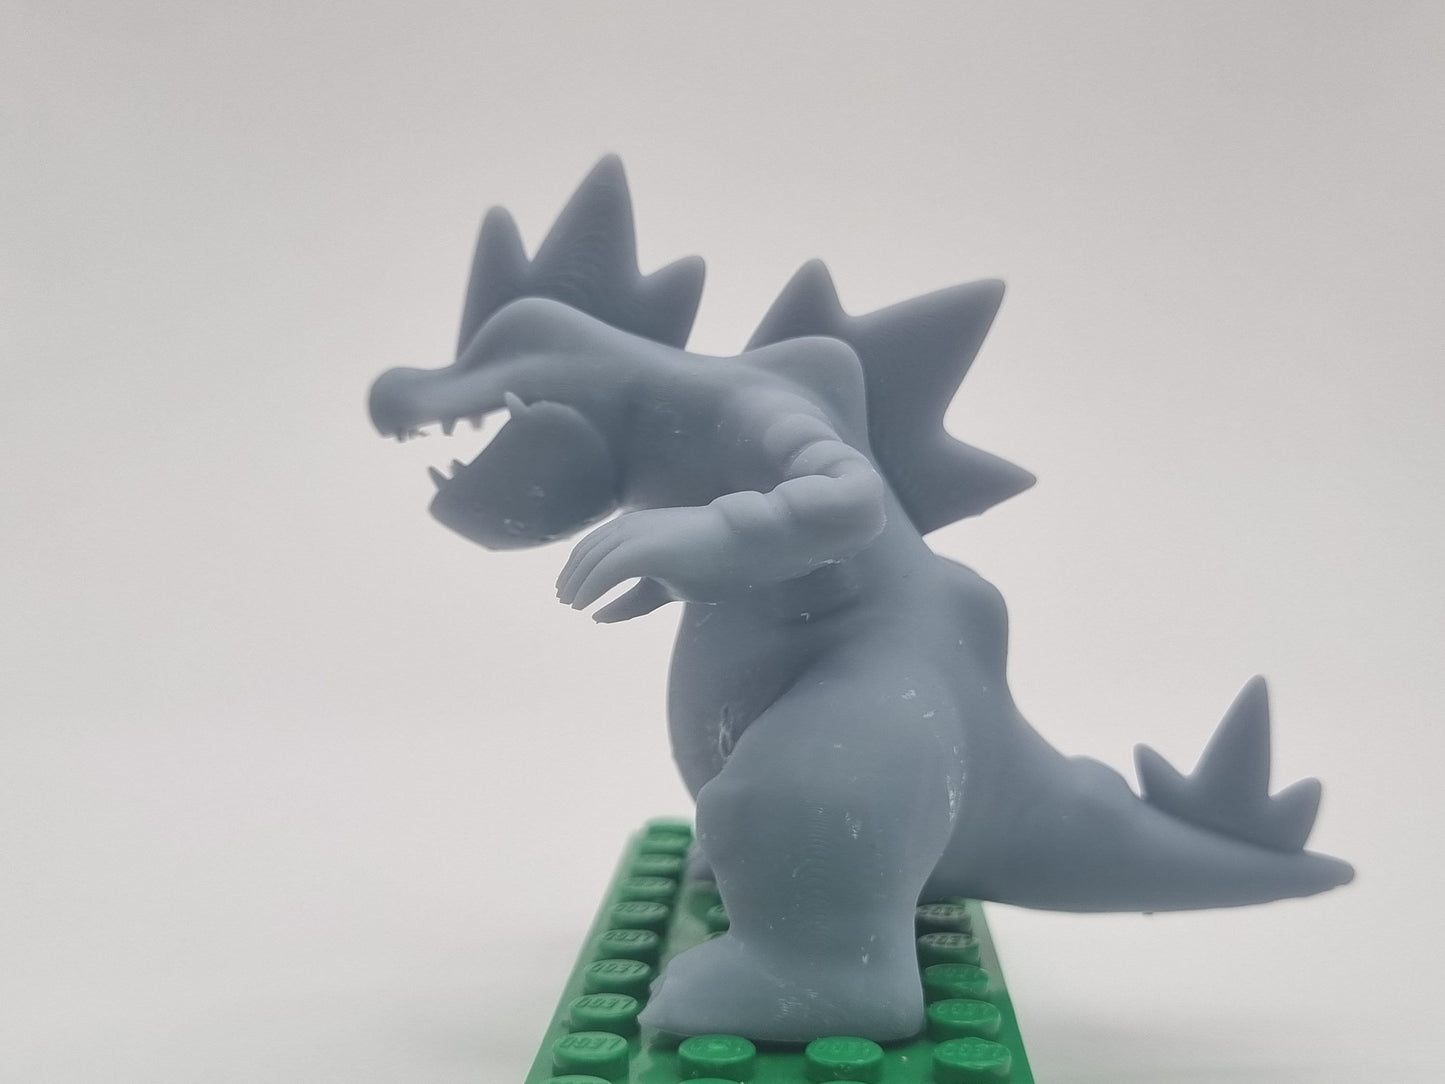 Building toy custom 3D printed big crocodile!